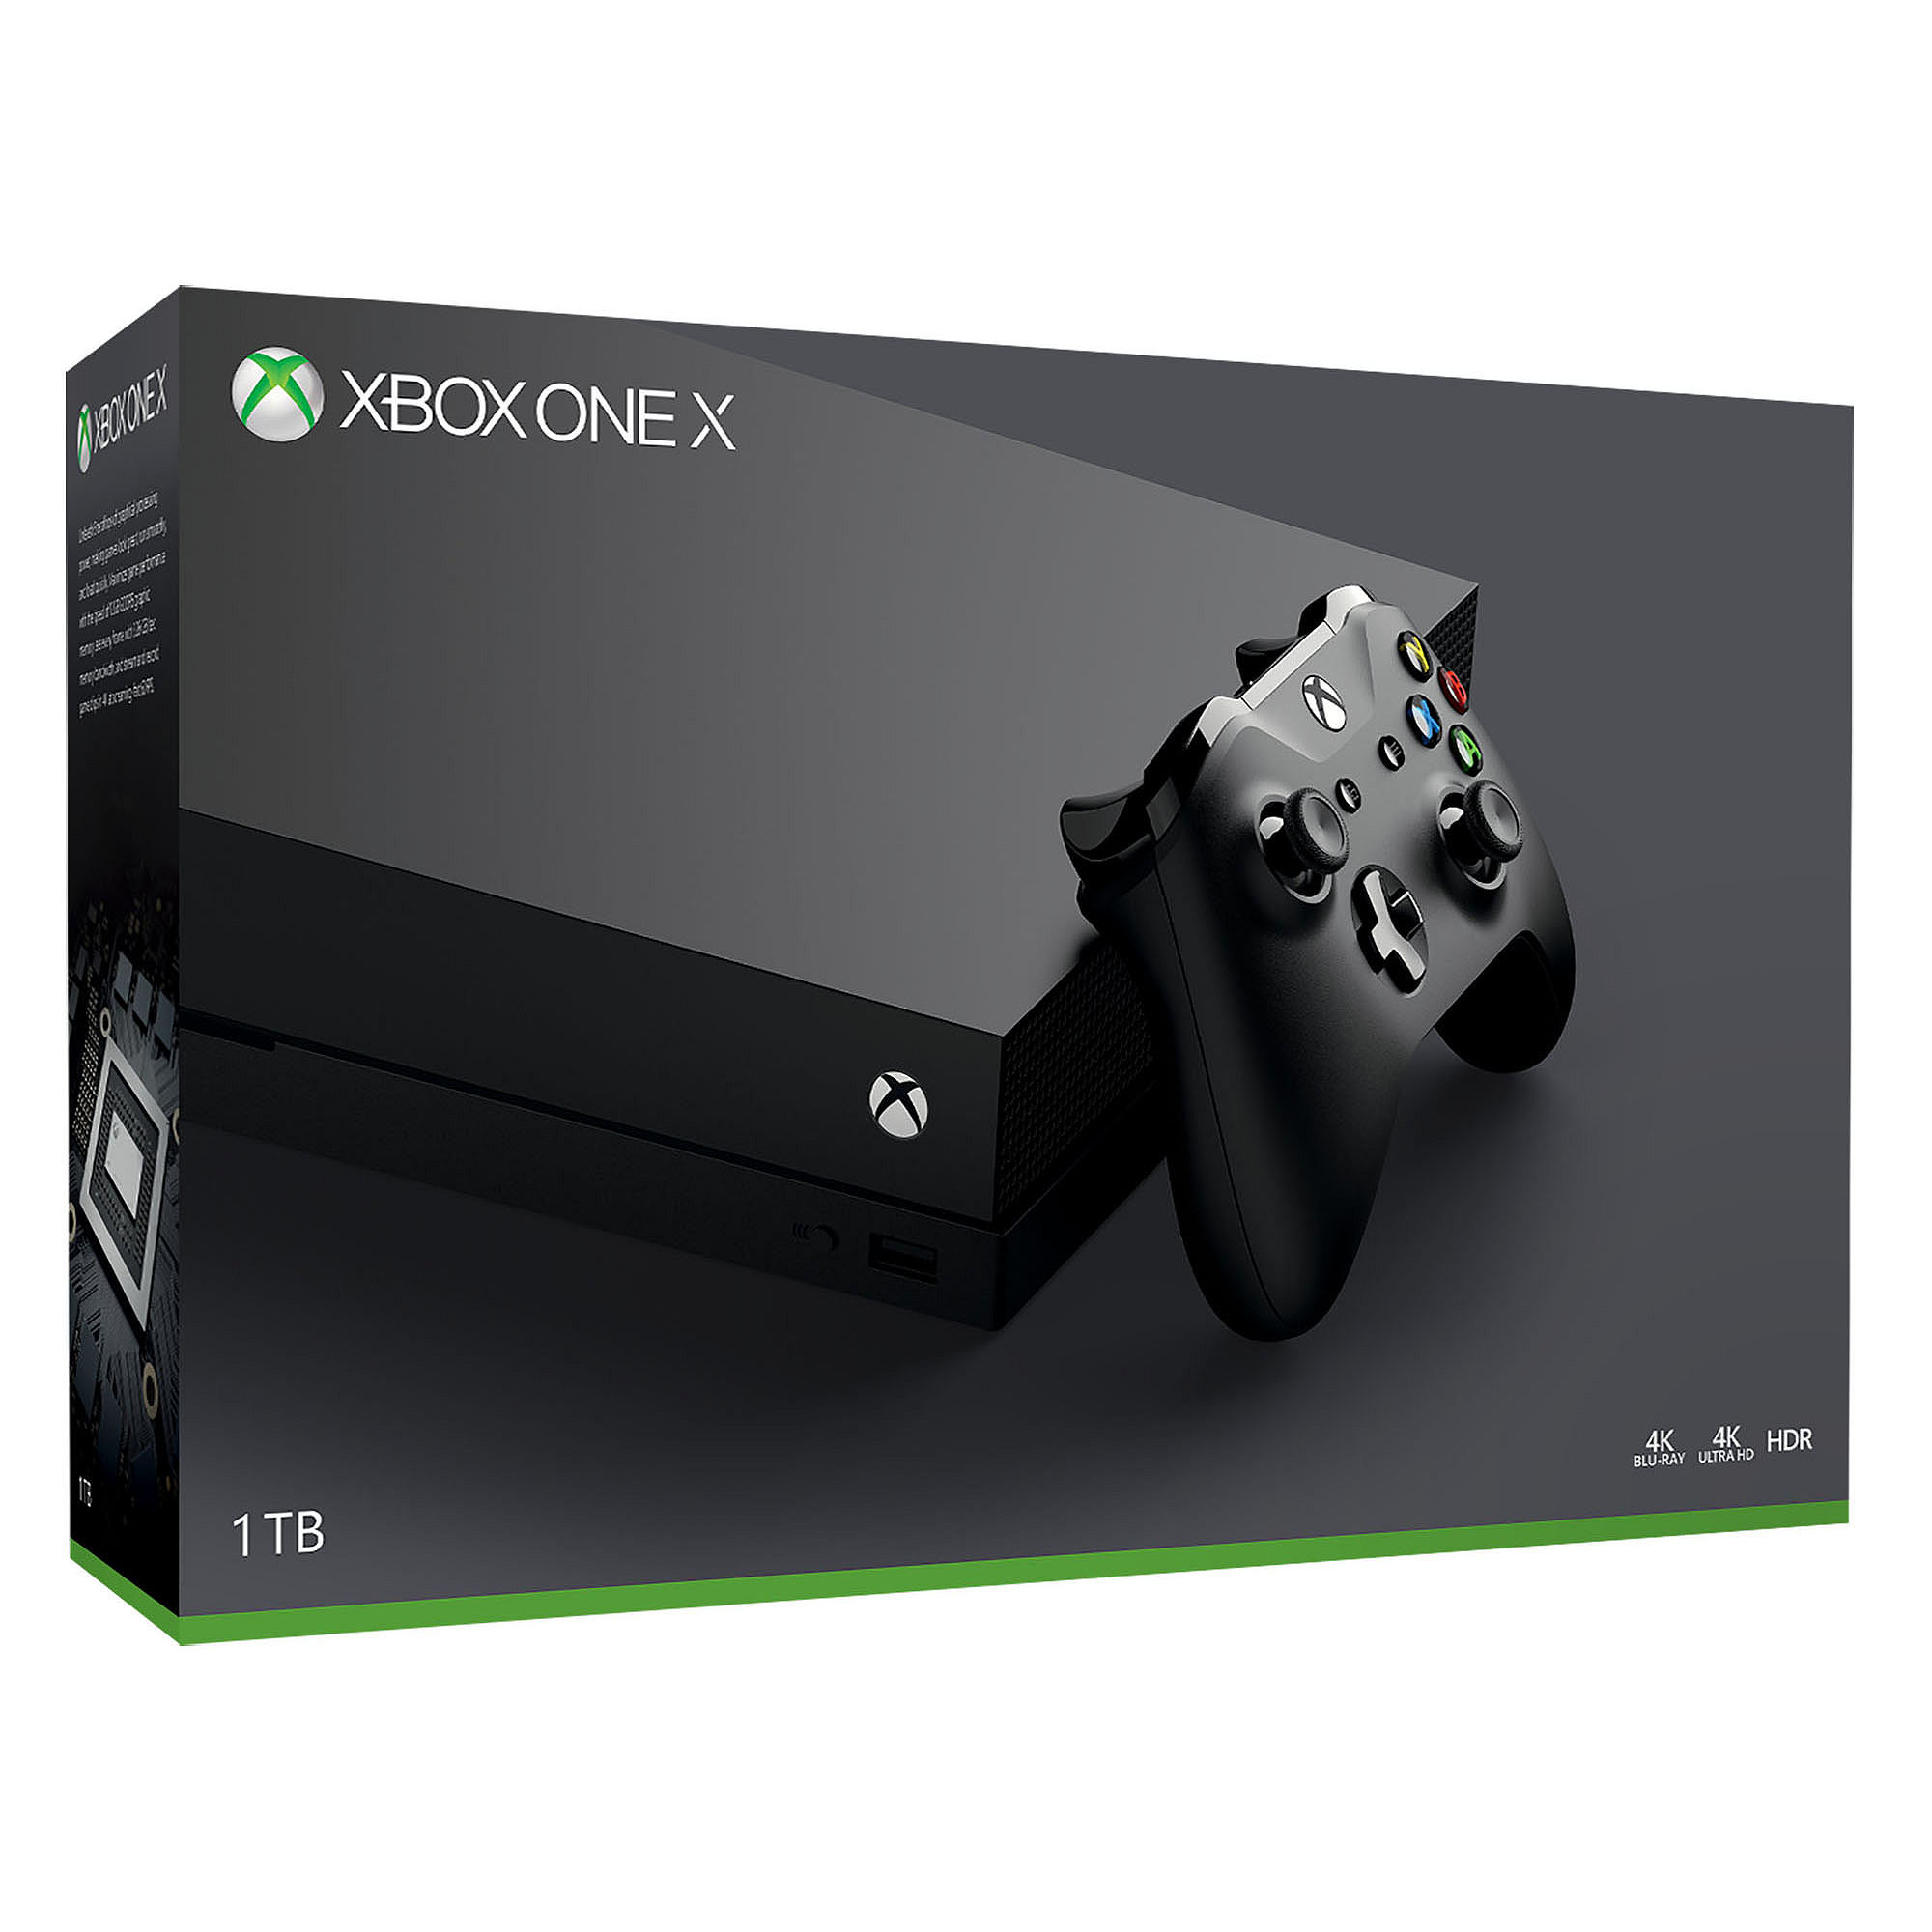 Microsoft Xbox One X 1TB Console, Black, CYV-00001 - image 1 of 3